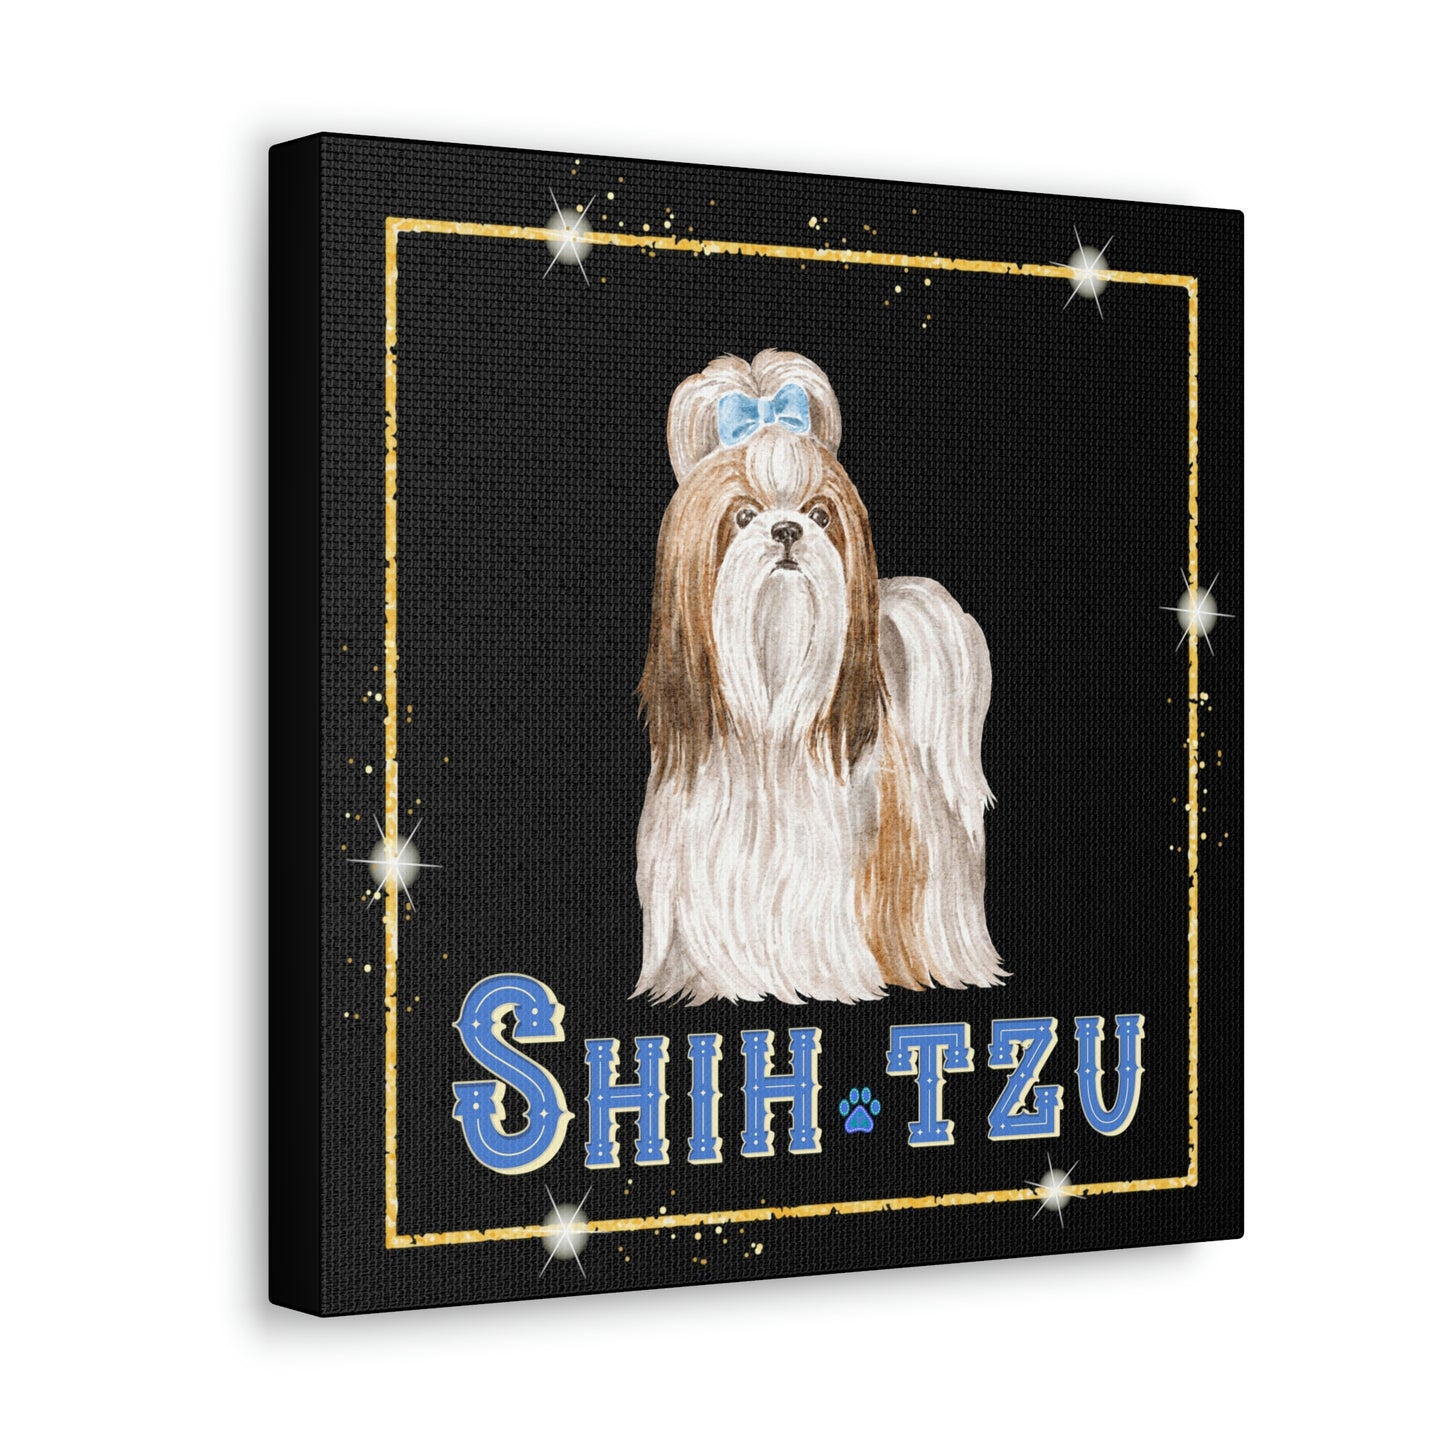 Beautiful Shih tzu dog design Canvas Gallery Wraps poster